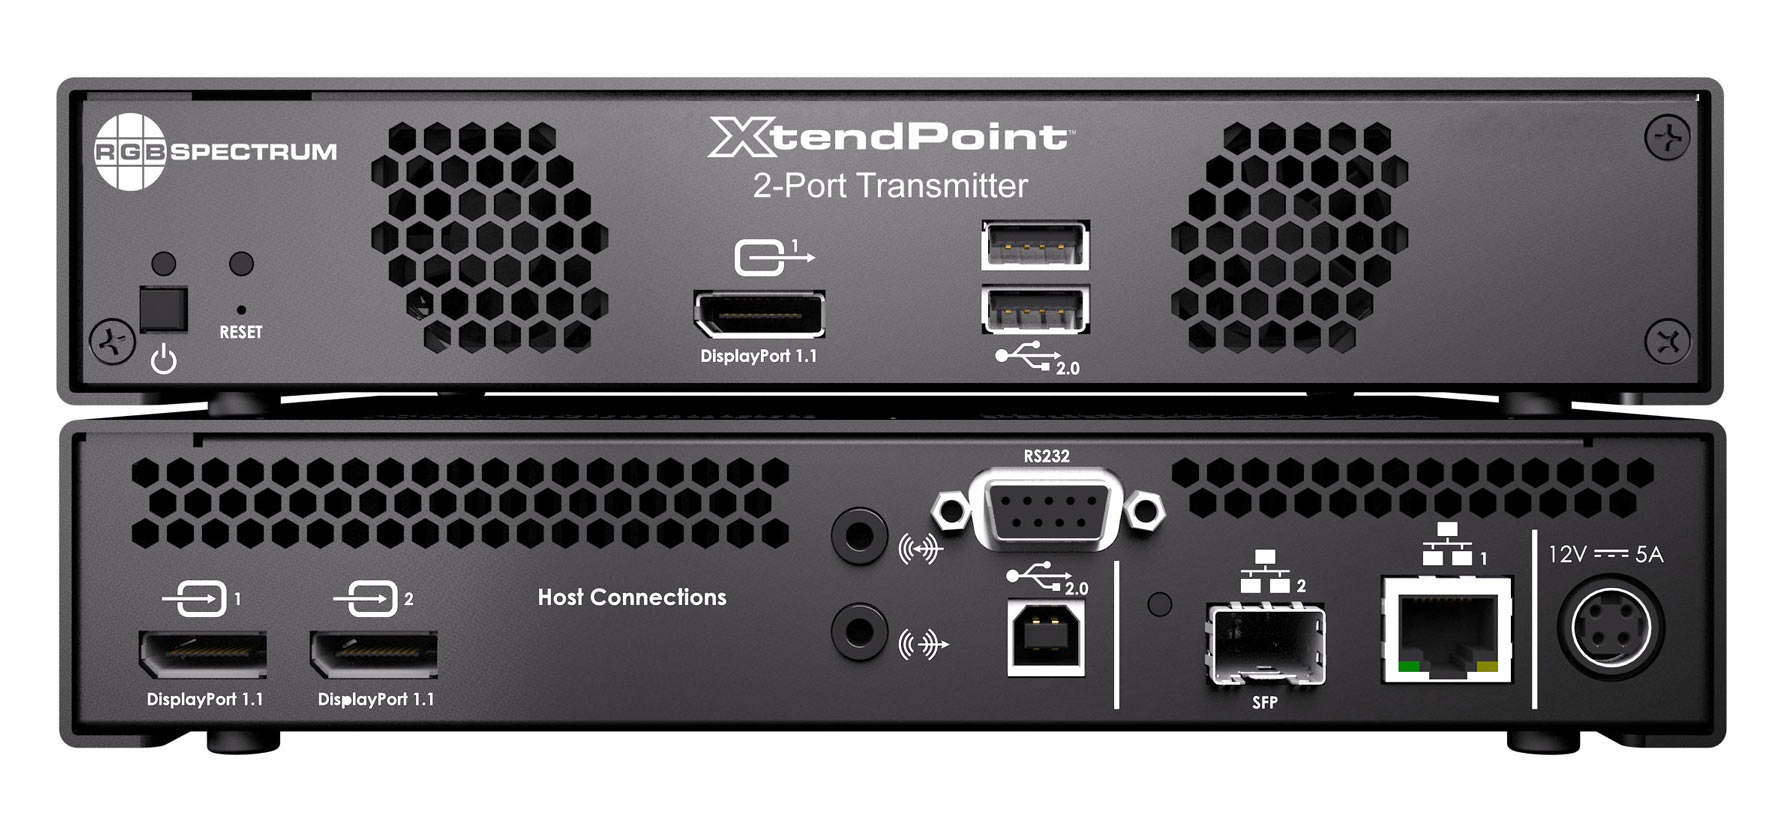 XtendPoint 2-Port Transmitter